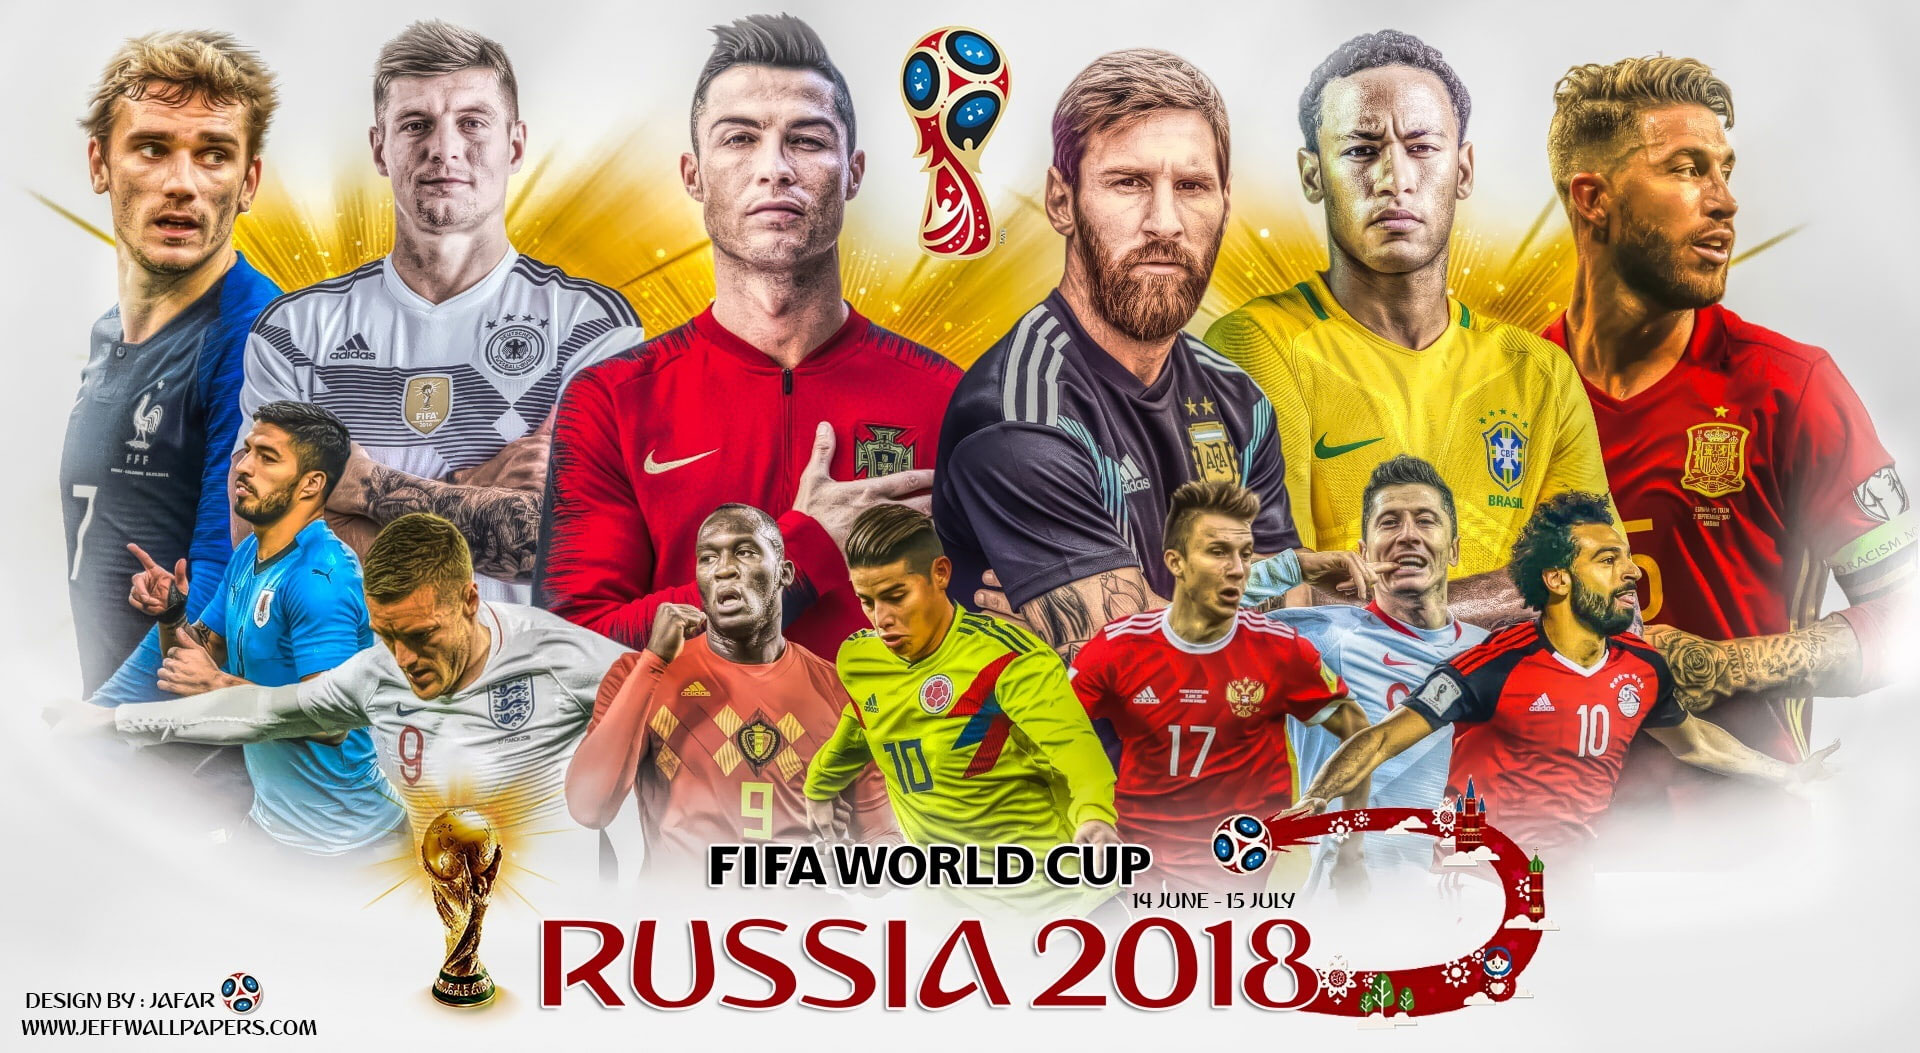 FIFA World Cup Russia 2018 wallpaper, Sports, Football